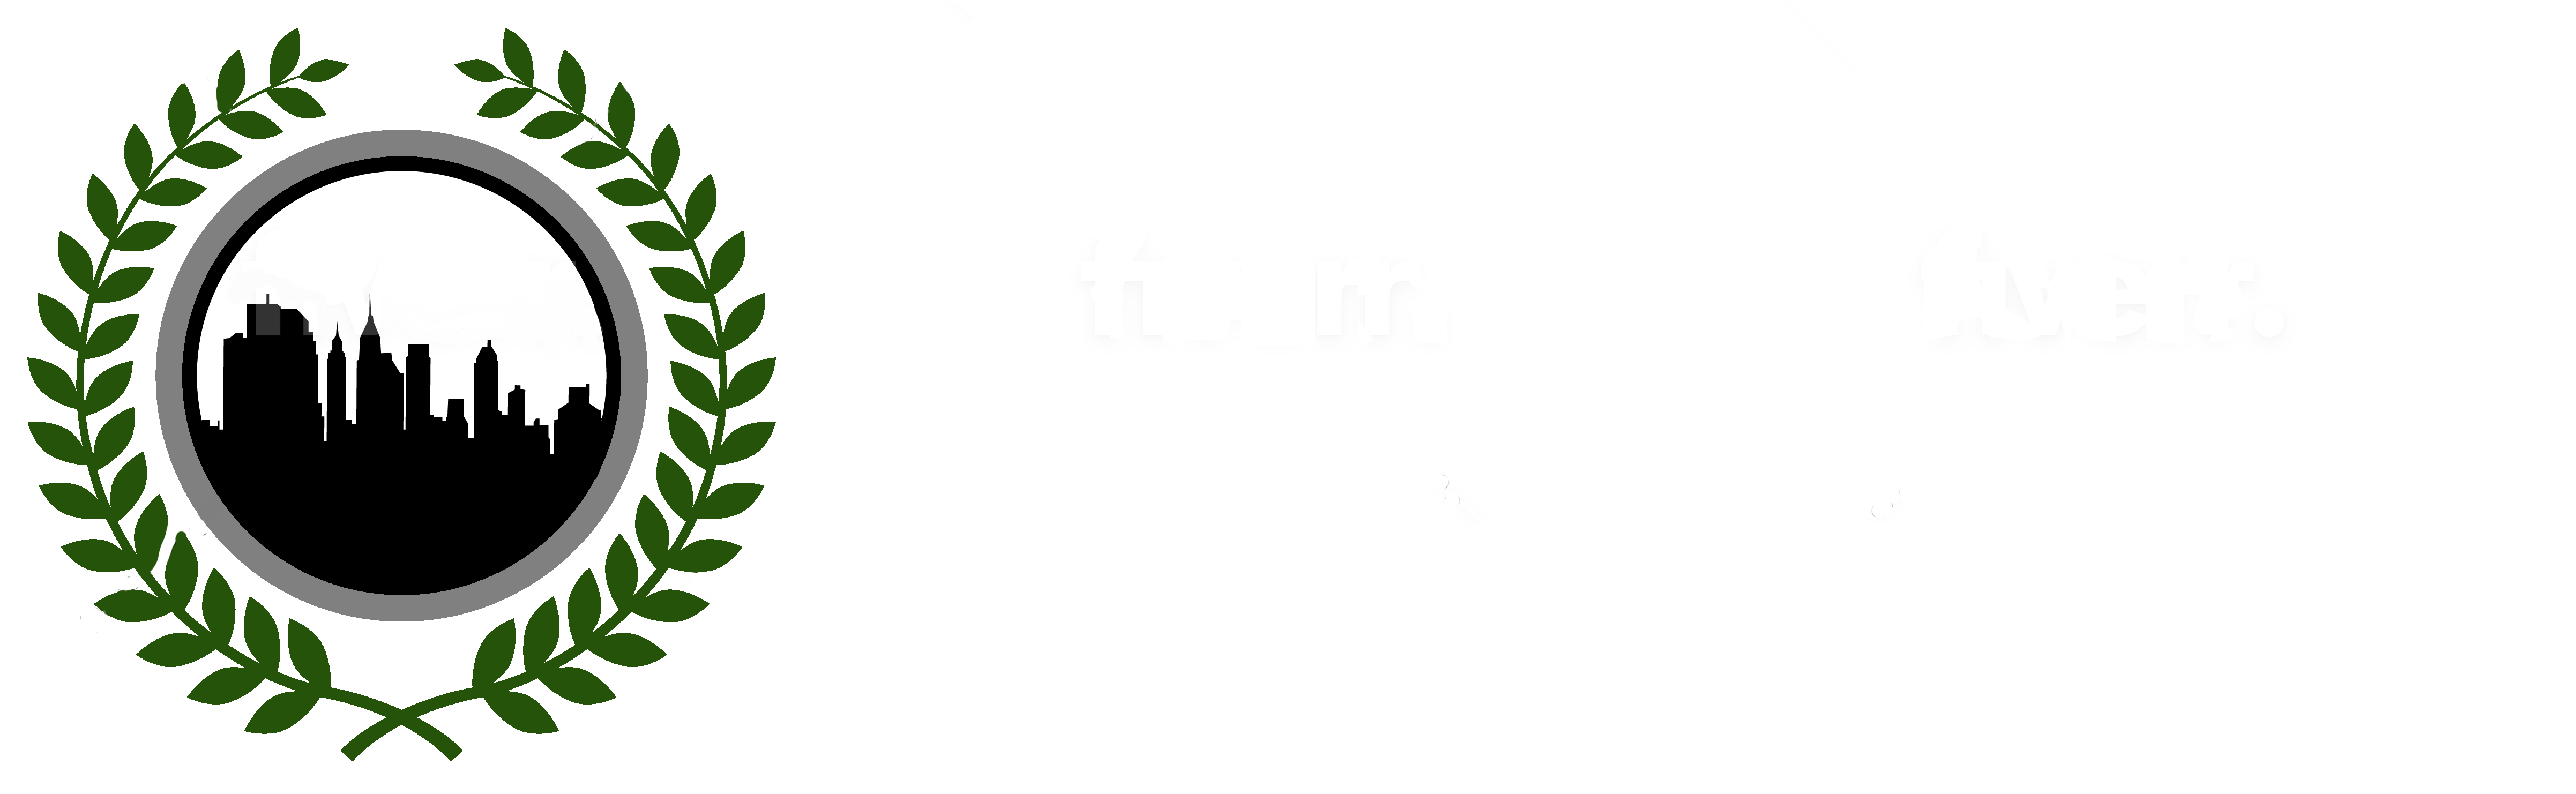 WBC Real Estate